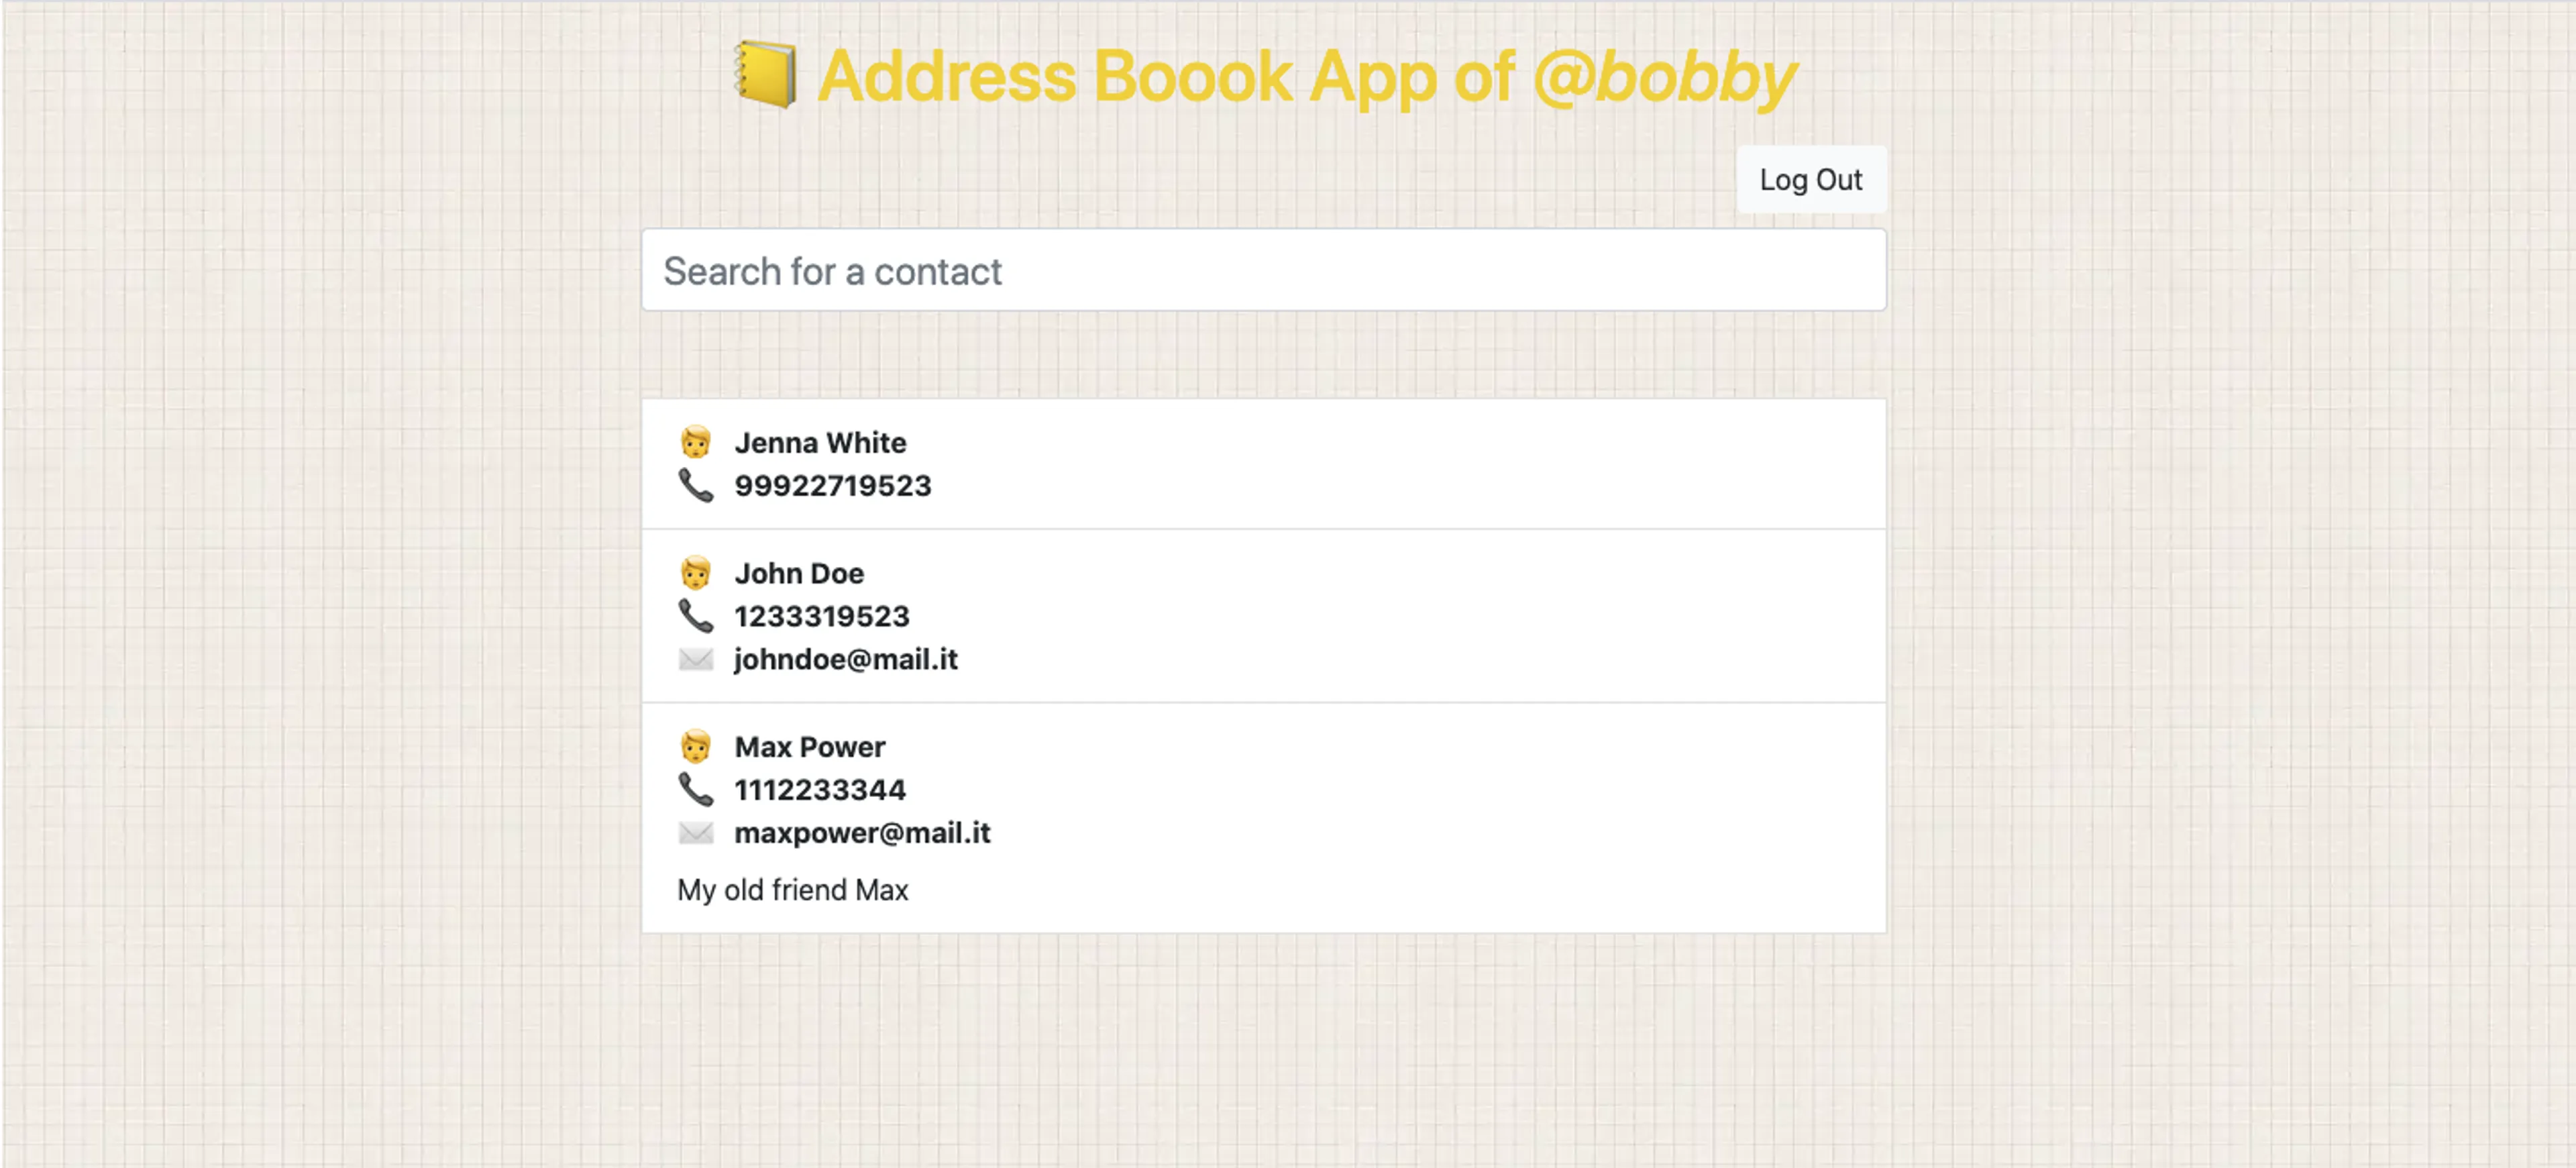 Address Book App